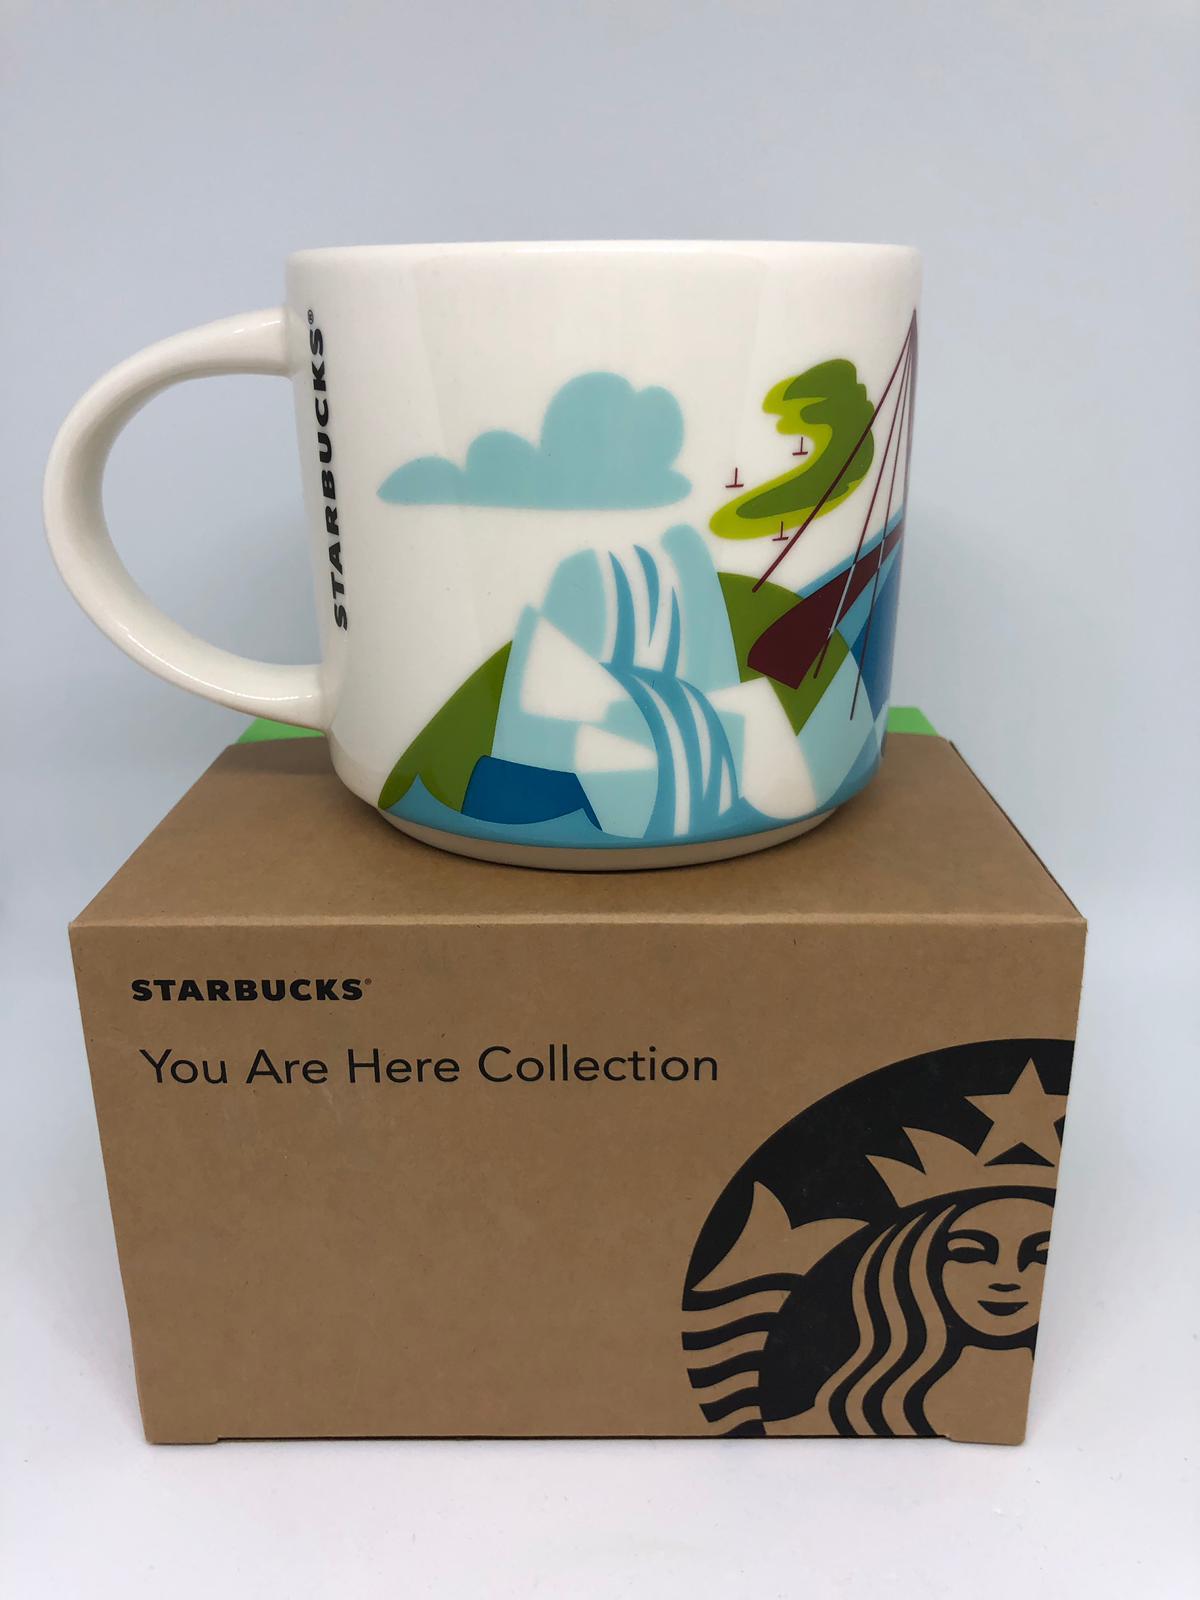 Starbucks You Are Here Langkawi Ceramic Coffee Mug New with Box